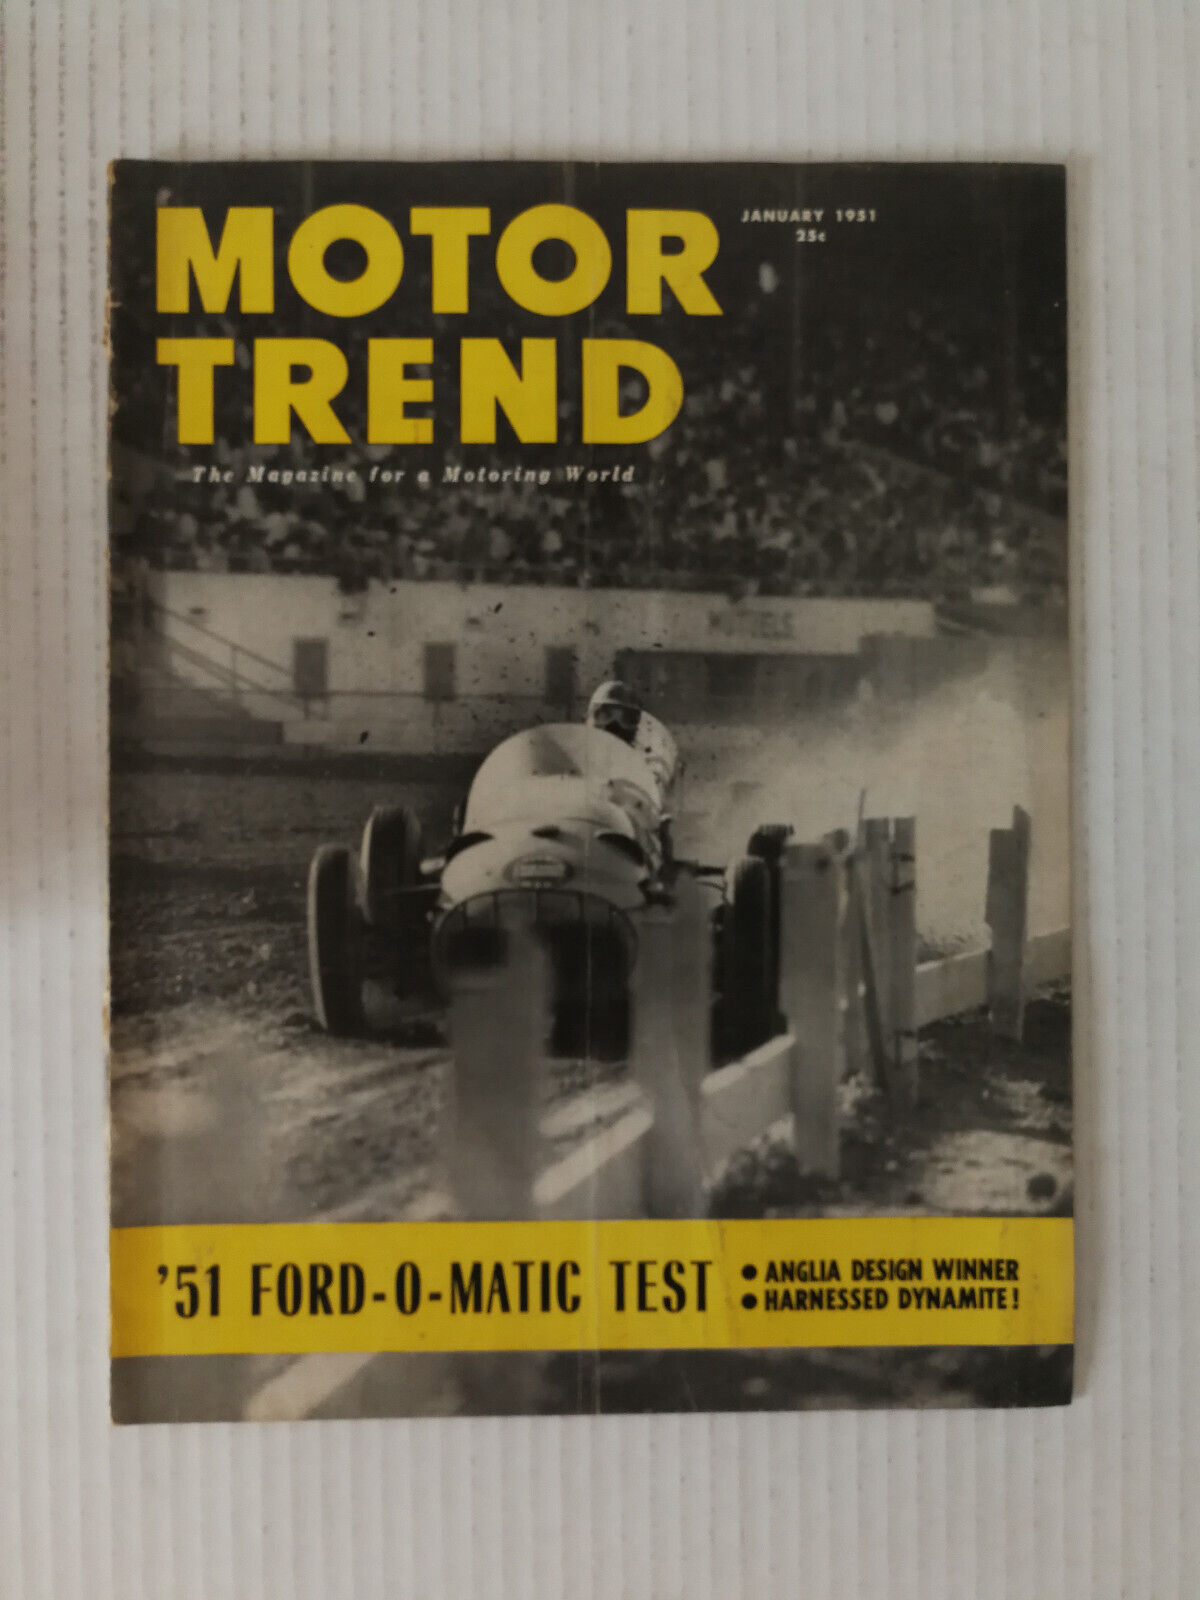 Motor Trend January 1951  Ford-O-Matic Motor Trails - Anglia Design Winner  723